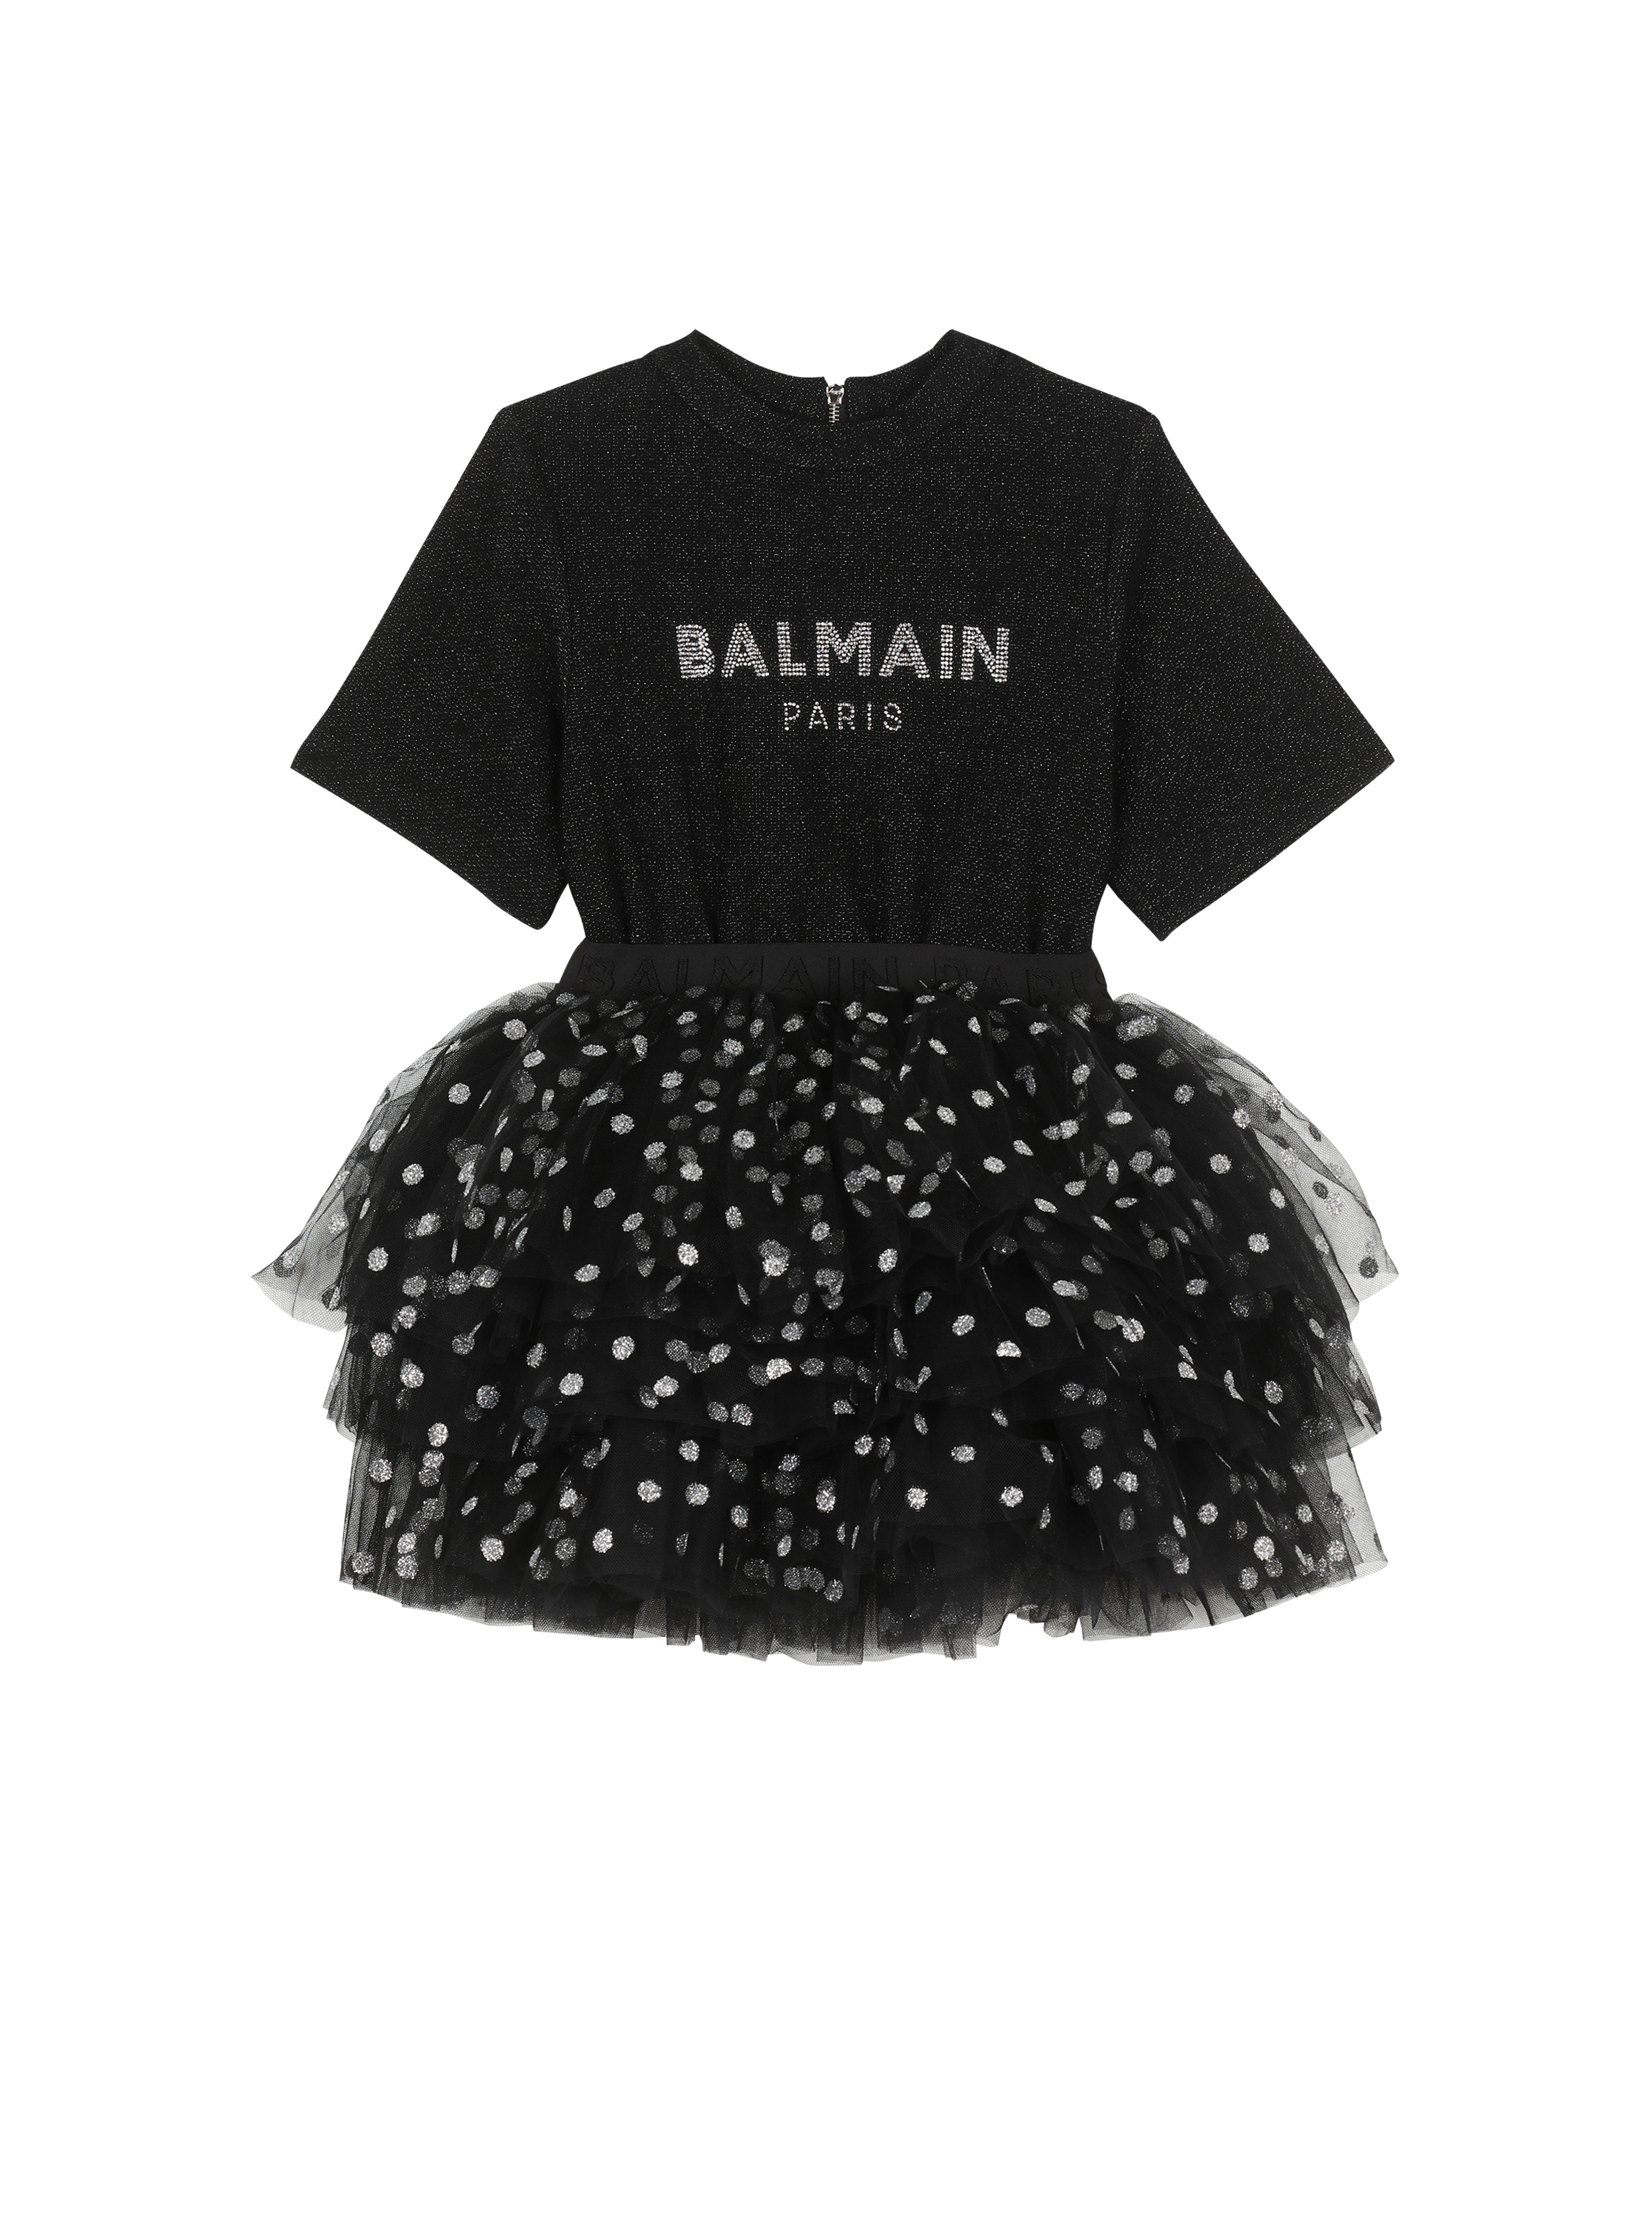 Balmain巴尔曼标志棉质连衣裙, black